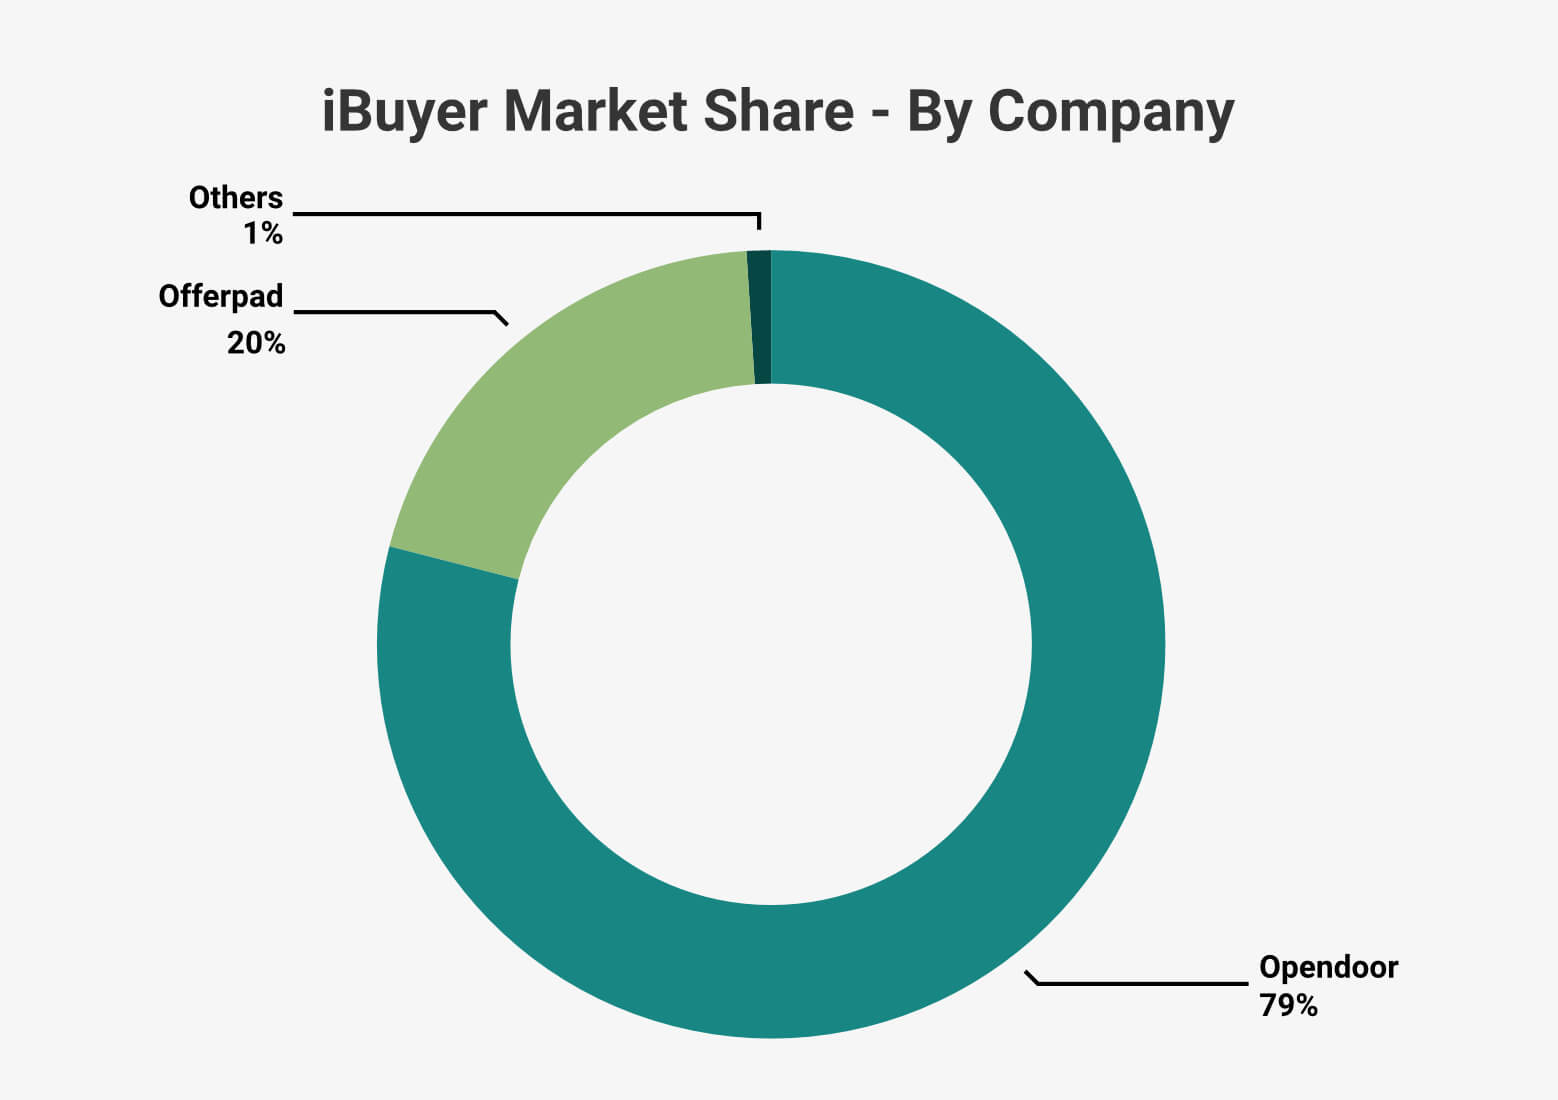 iBuyer Market Share by Company